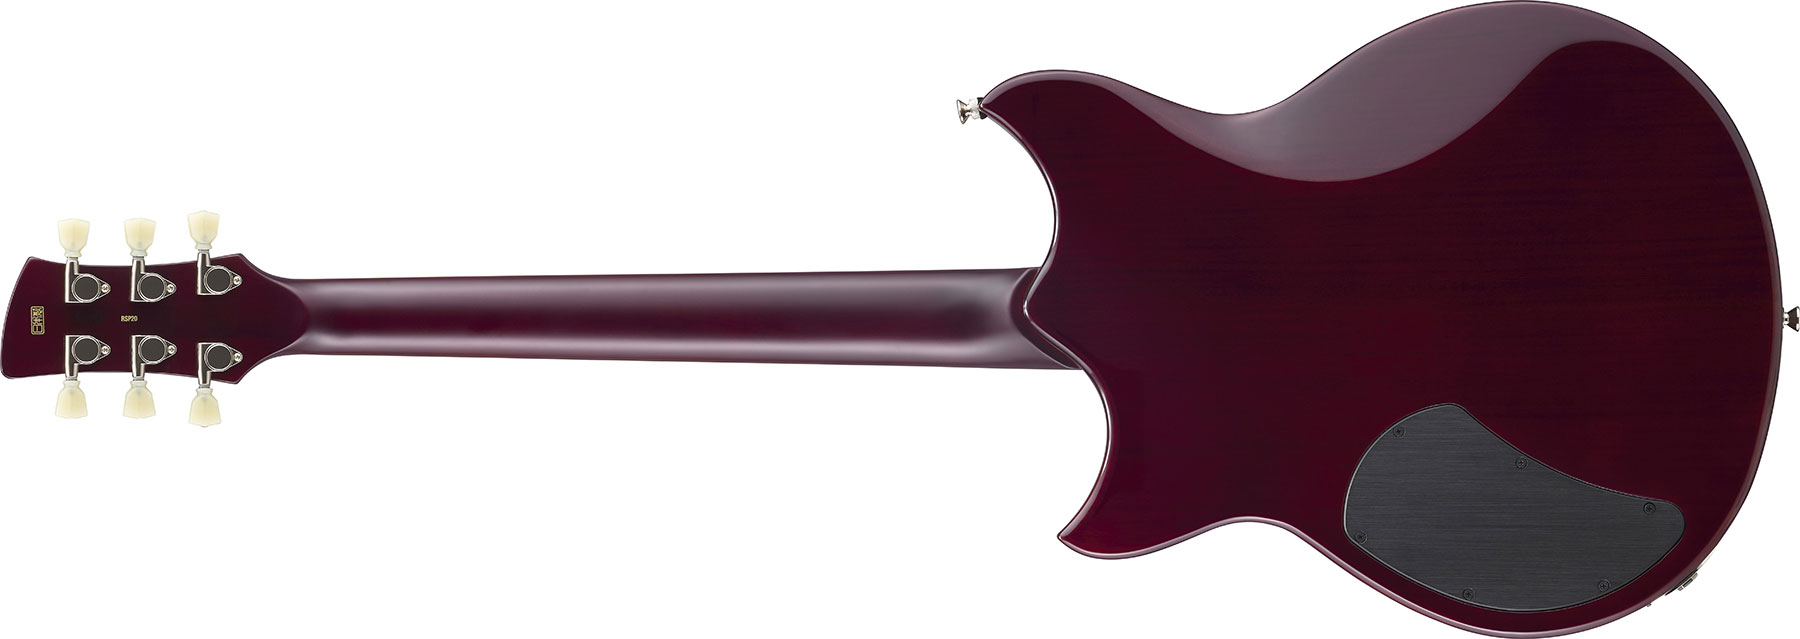 Yamaha Rss02t Revstar Standard 2p90 Ht Rw - Swift Blue - Guitarra eléctrica de doble corte. - Variation 2